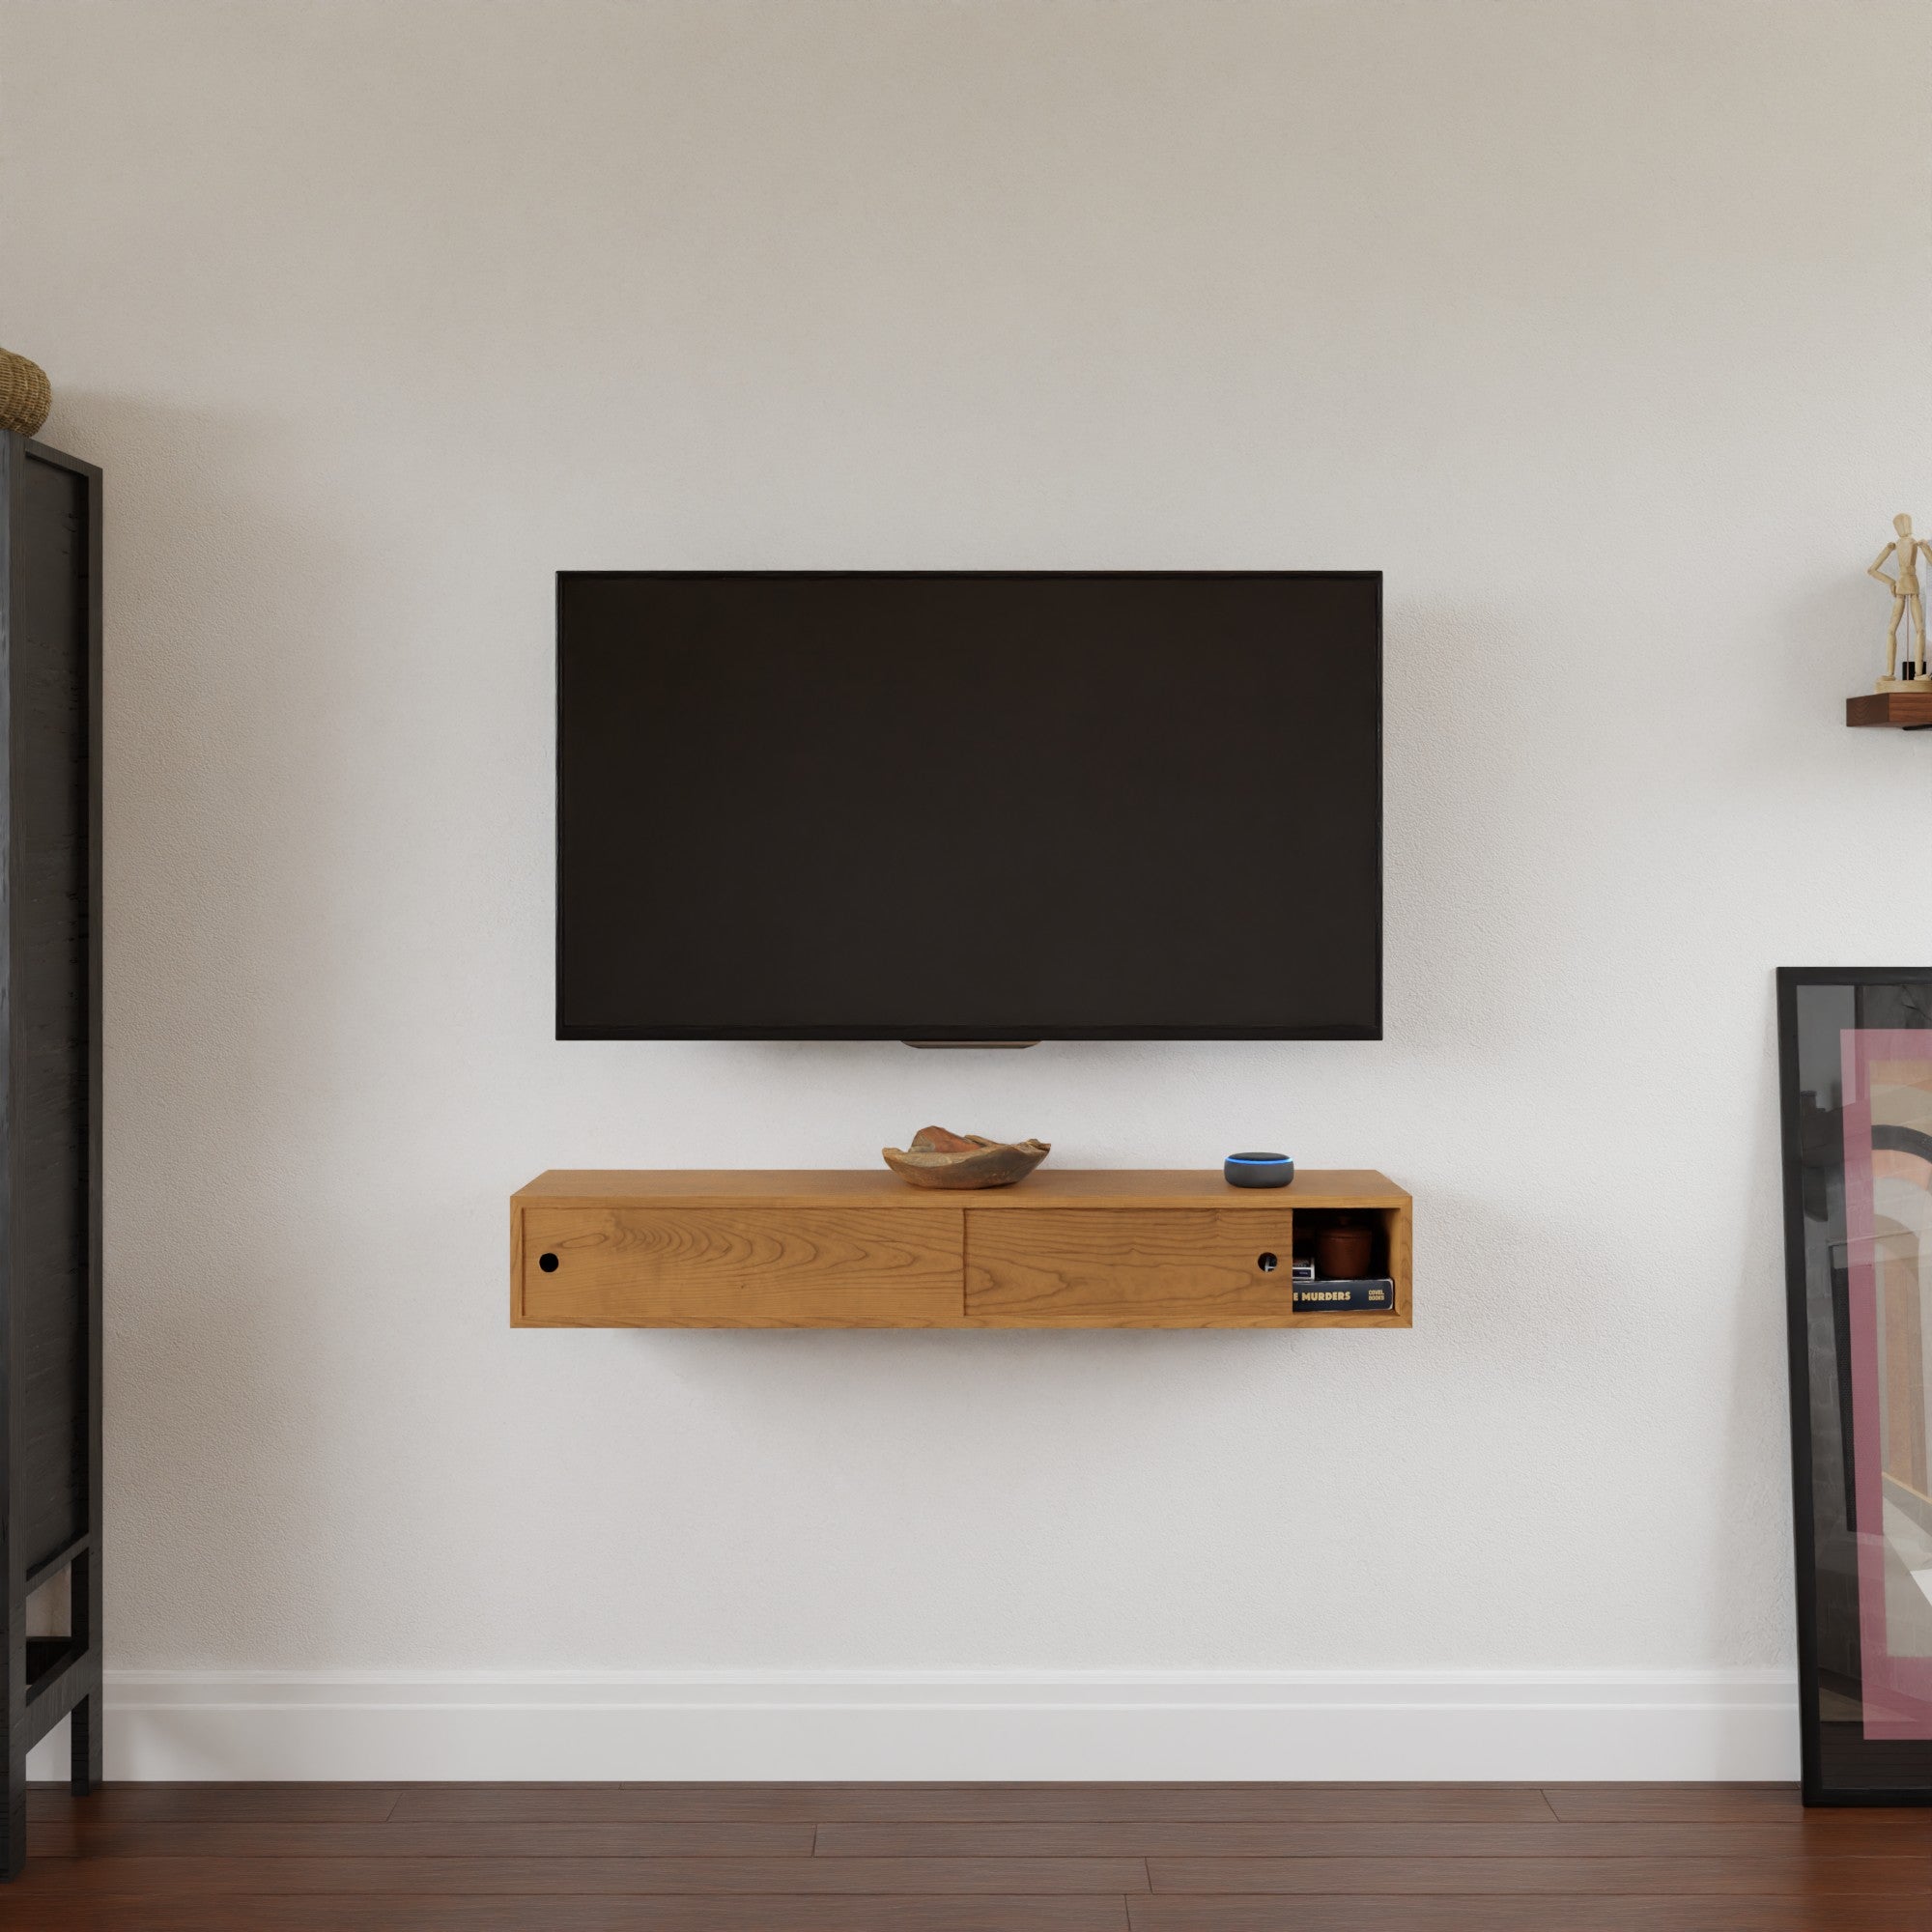 Cherry Media Console / TV Stand - Krøvel Furniture Co. Handmade in Maine